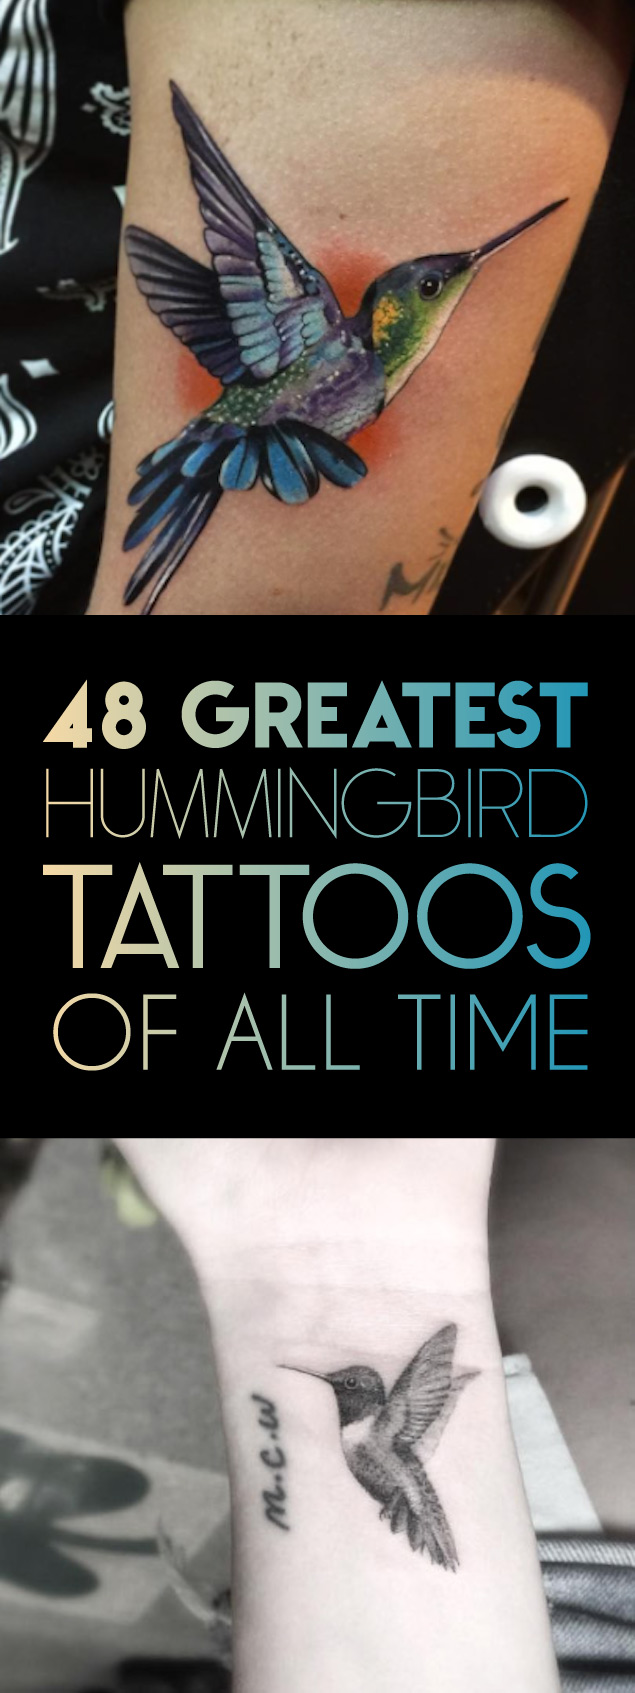 Only The Best Hummingbird Tattoos!